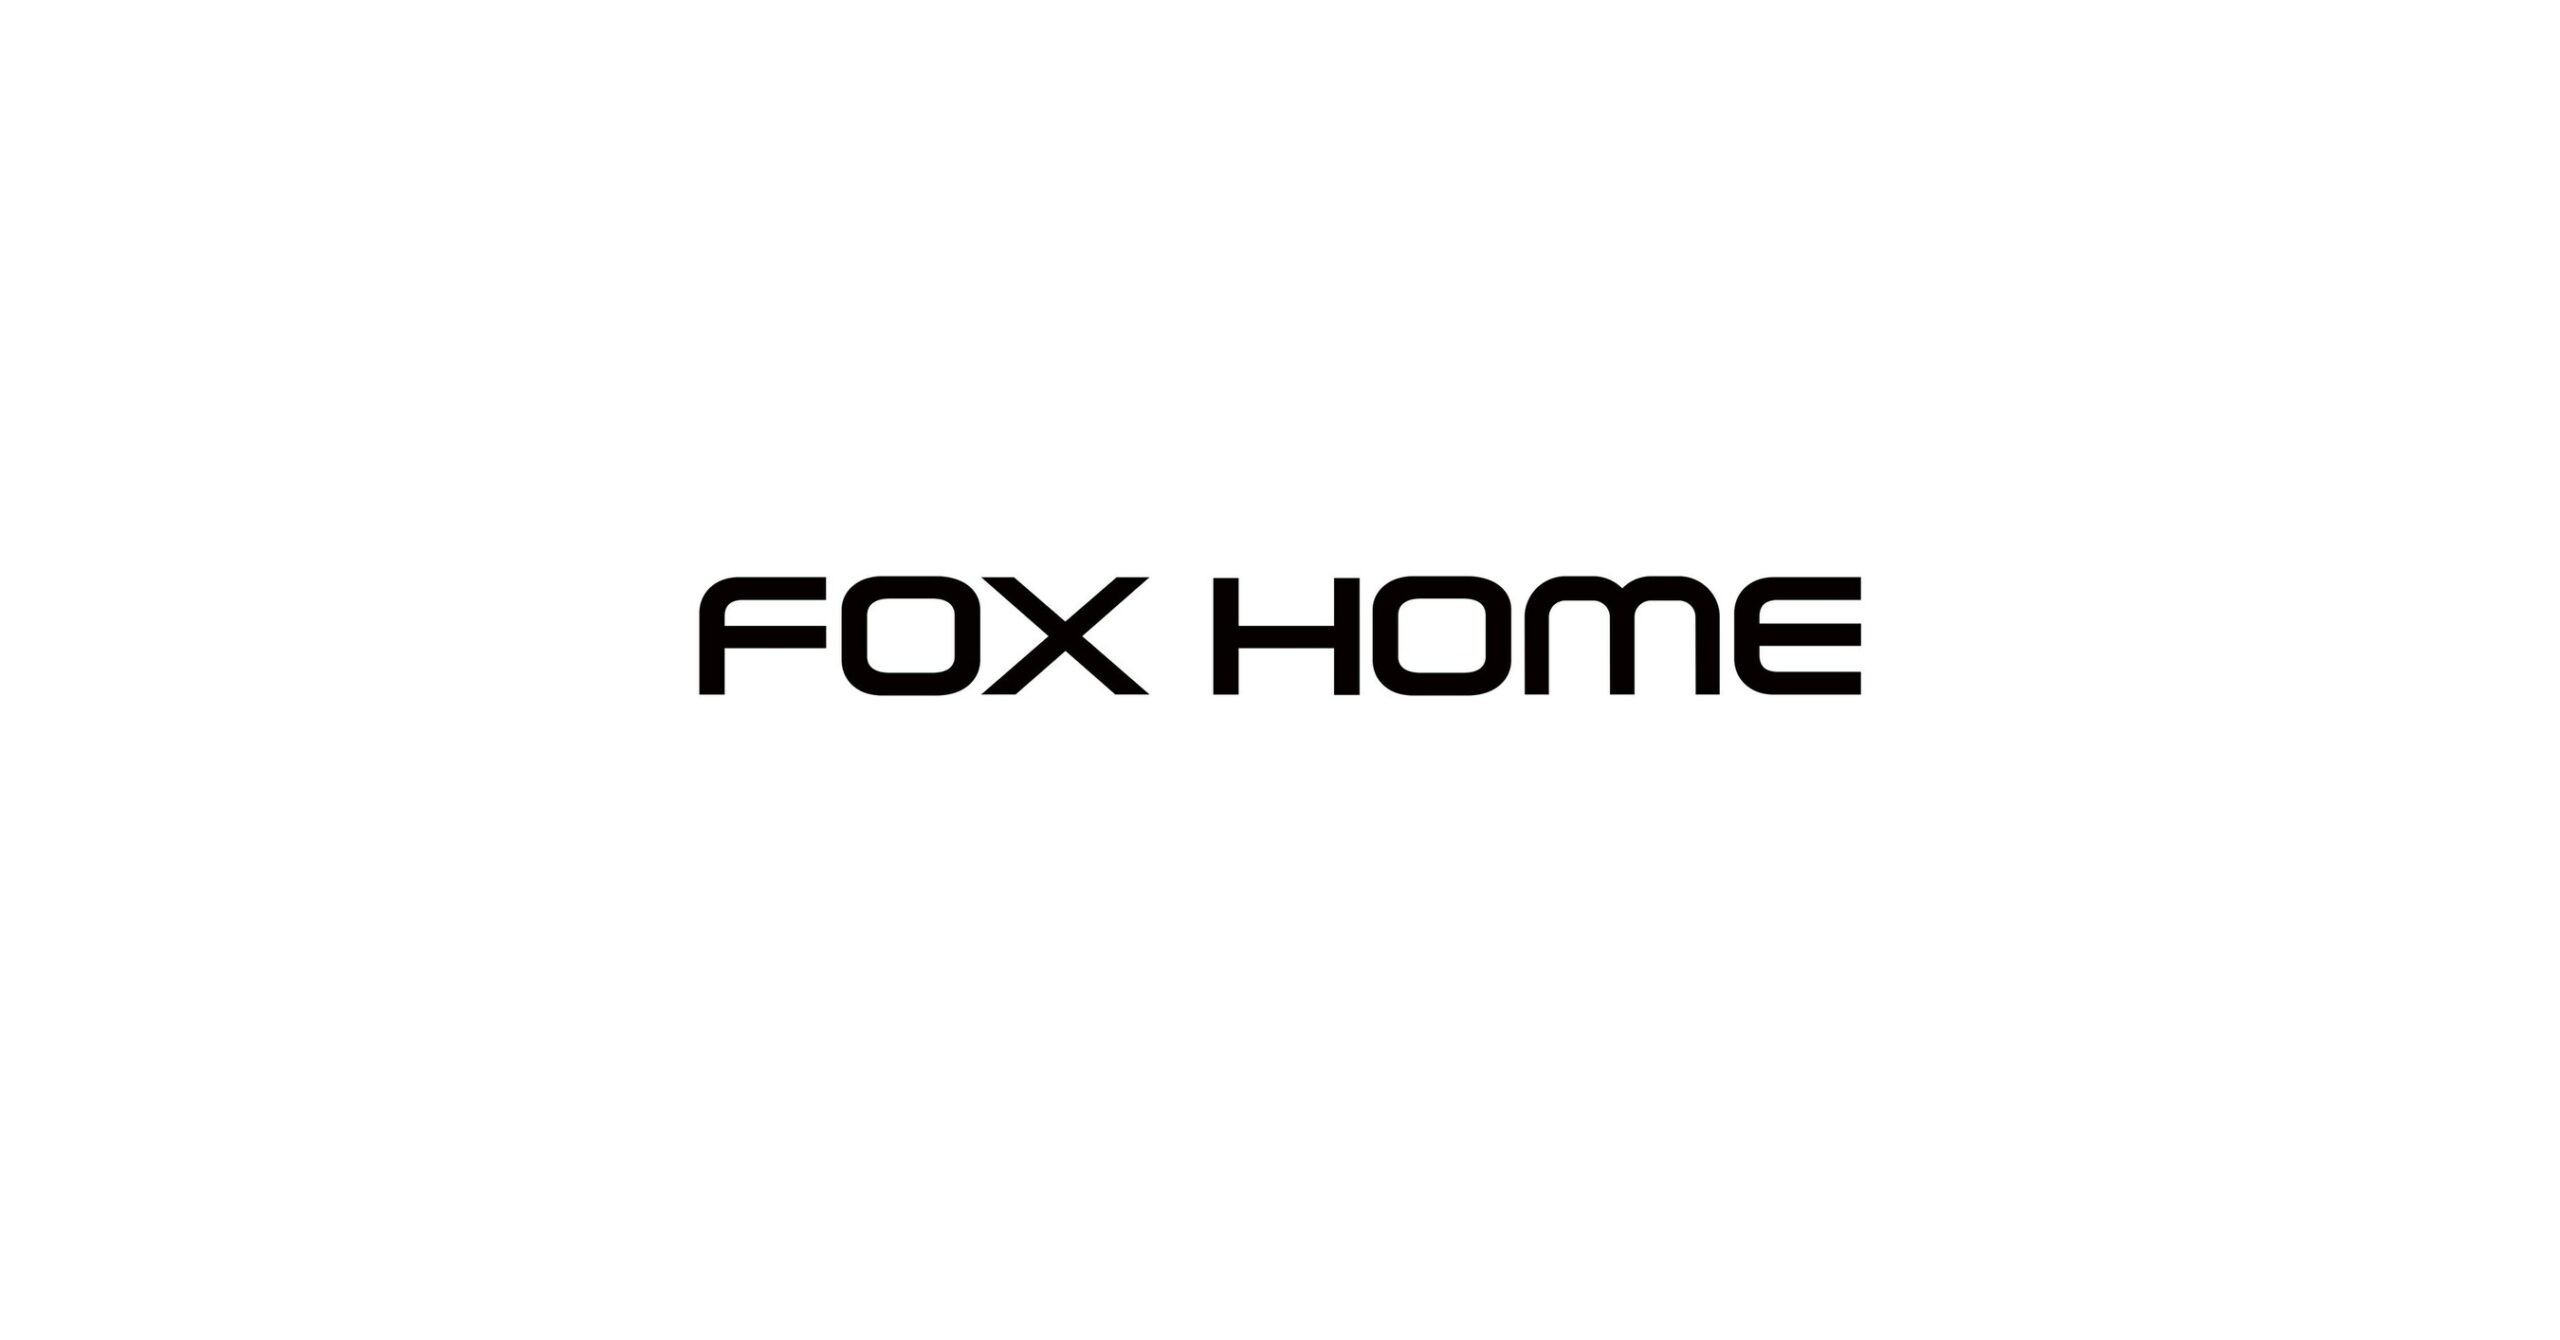 FOX HOME logo